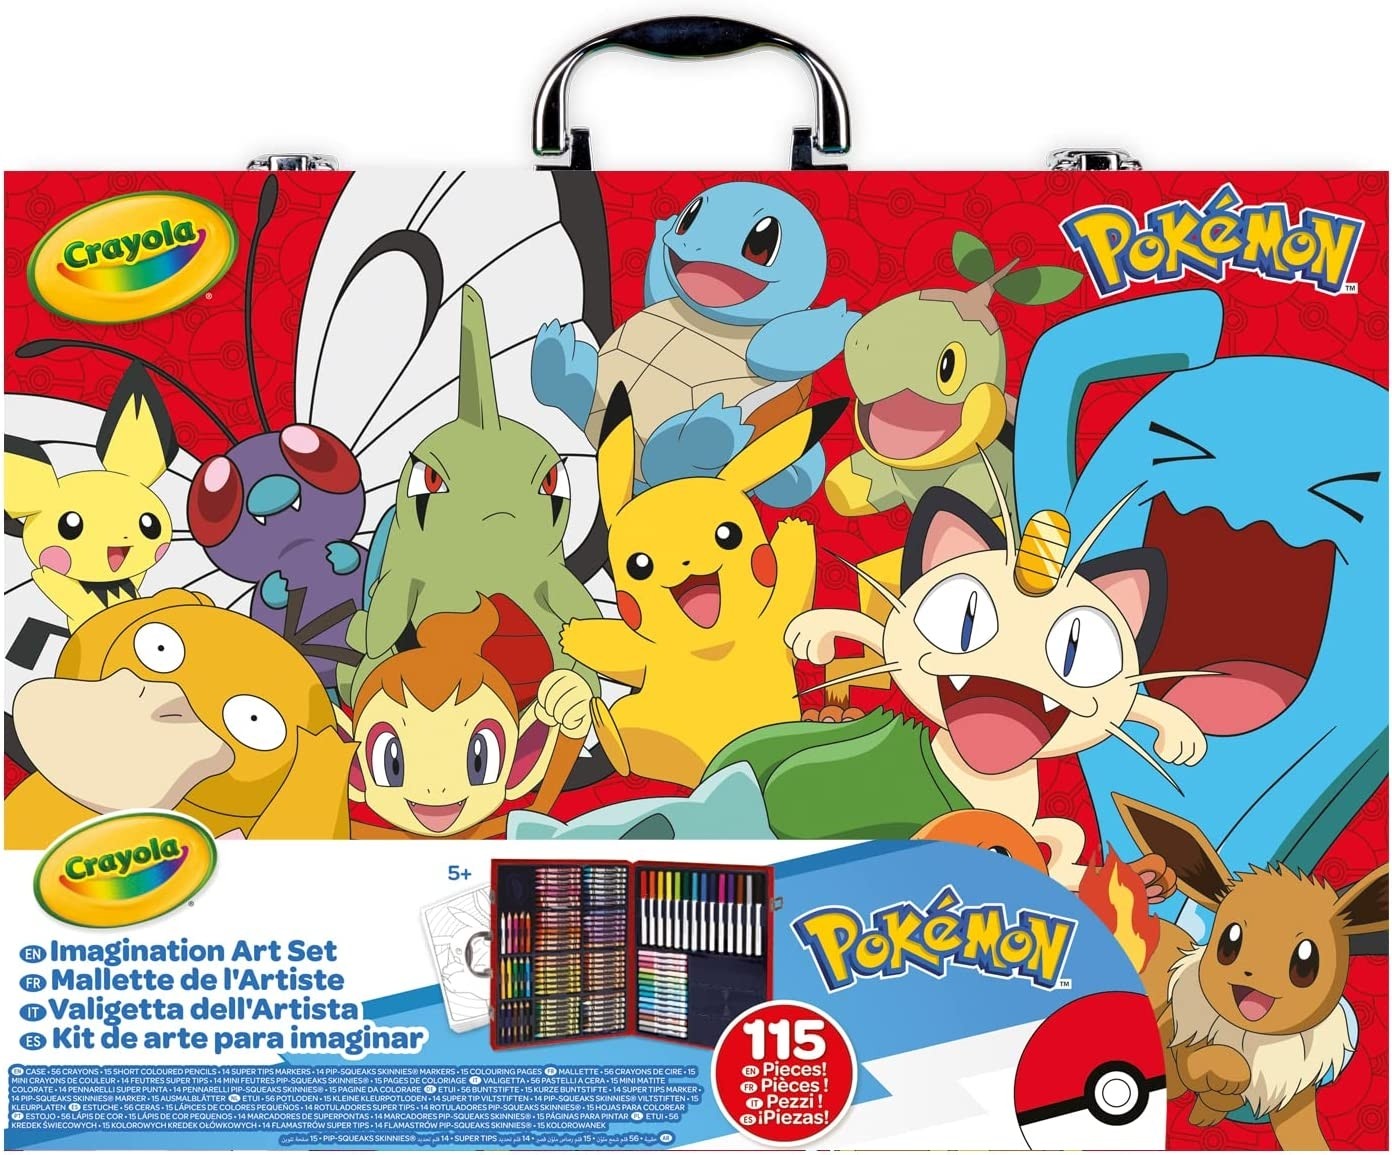 Crayola - Valigetta dell'Artista Pokémon, Set Creativo con 115 pezzi